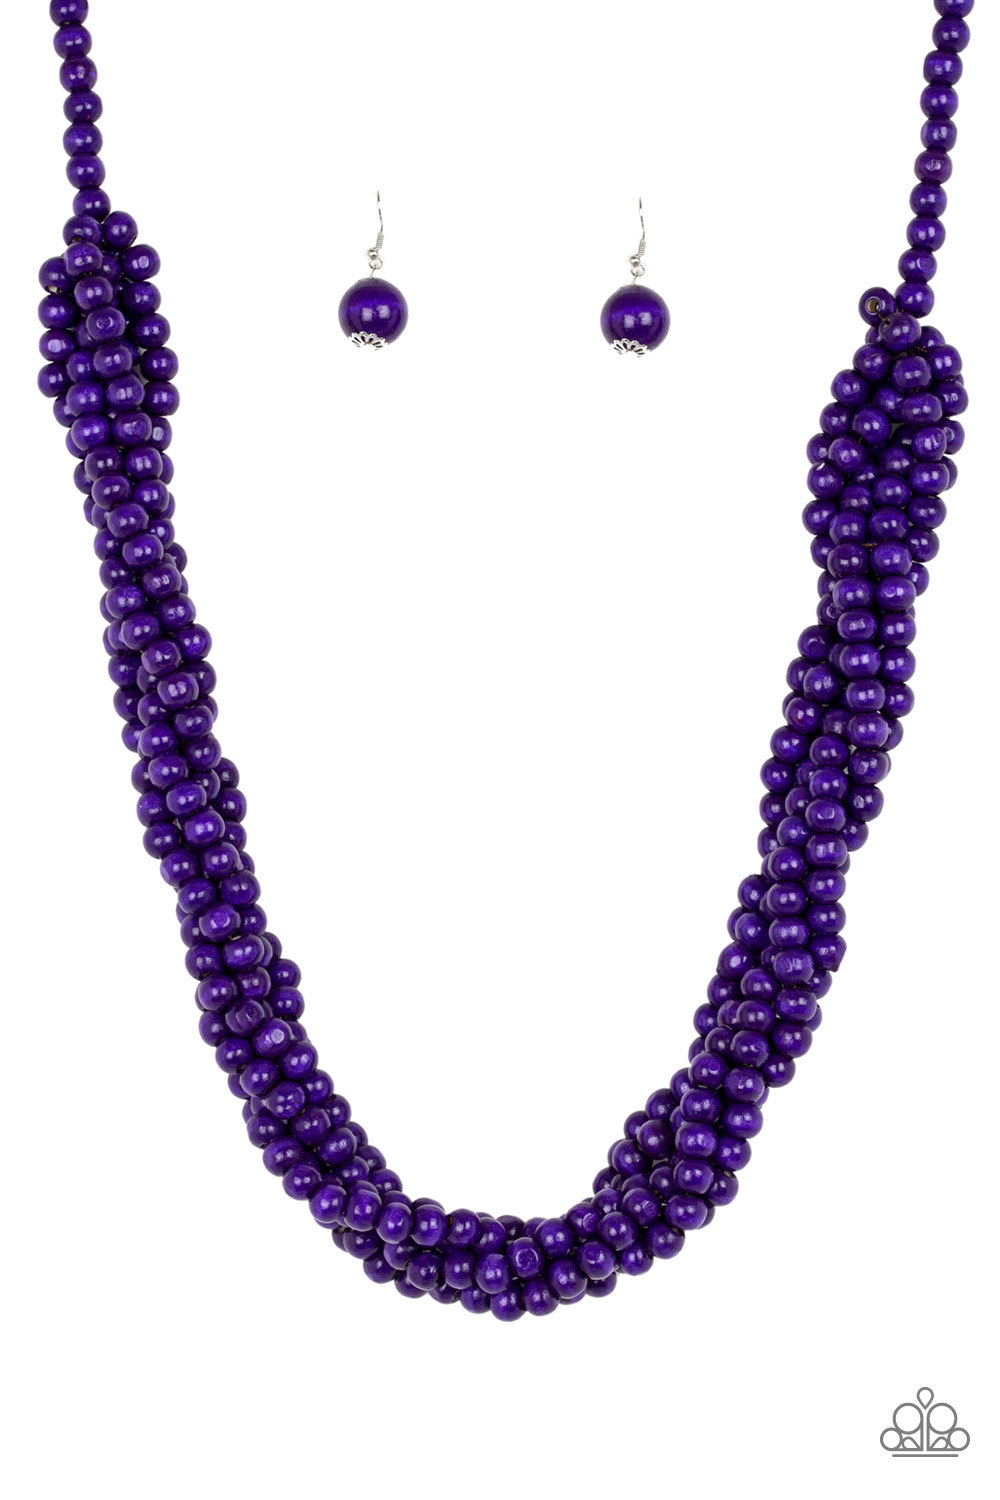 Paparazzi Accessories  - Tahiti Tropic - #N144 Purple Necklace